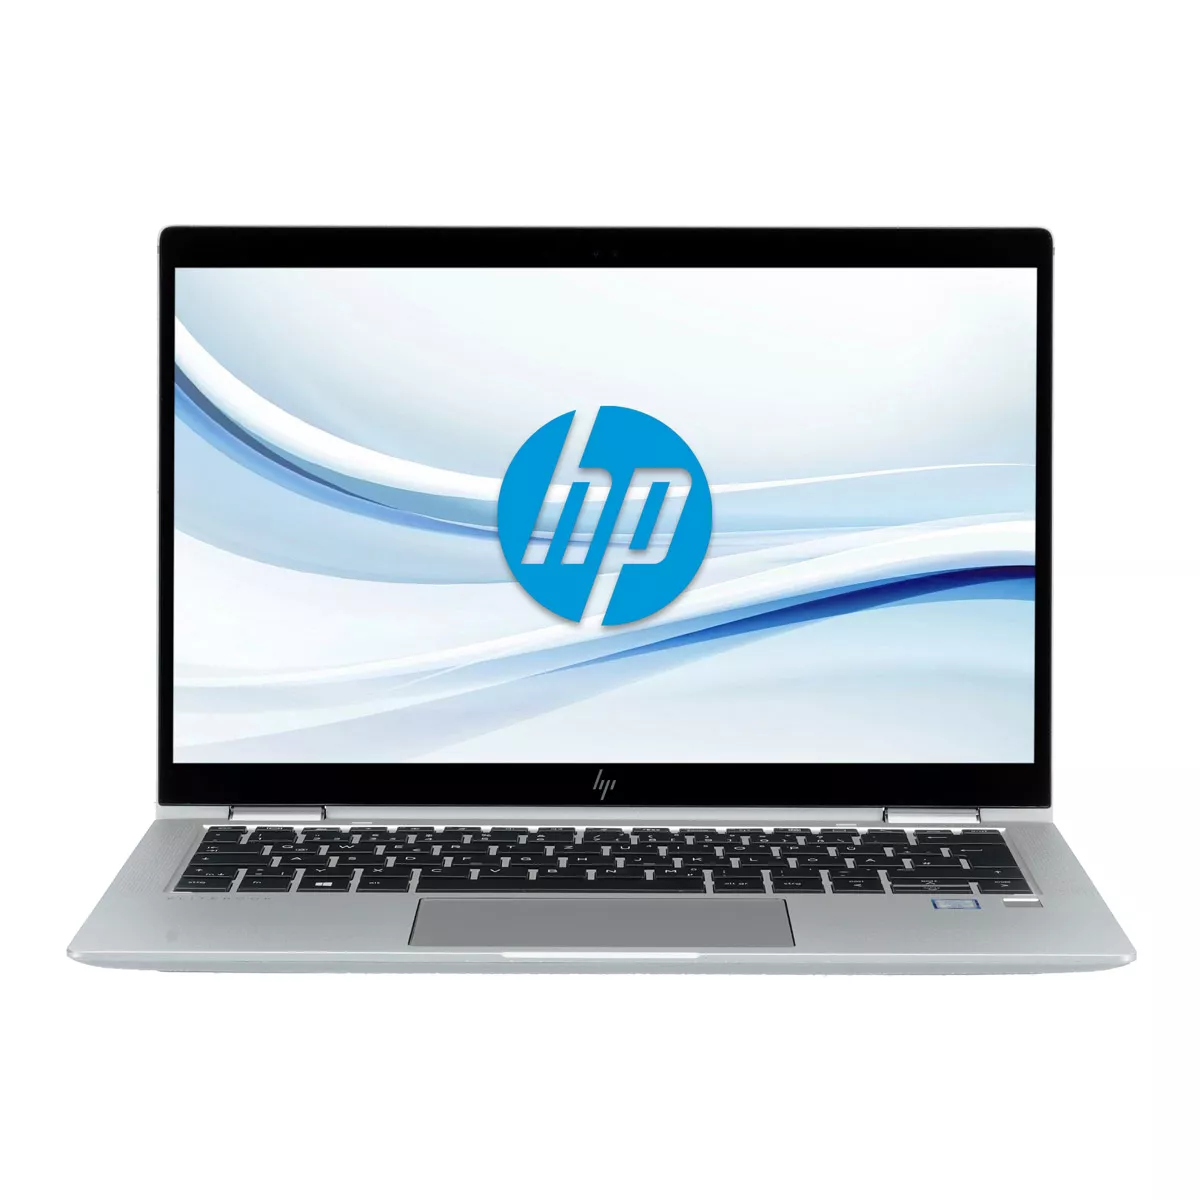 HP EliteBook x360 1030 G3 Core i7 8650U 16 GB 500 GB M.2 nVME SSD Touch Webcam B